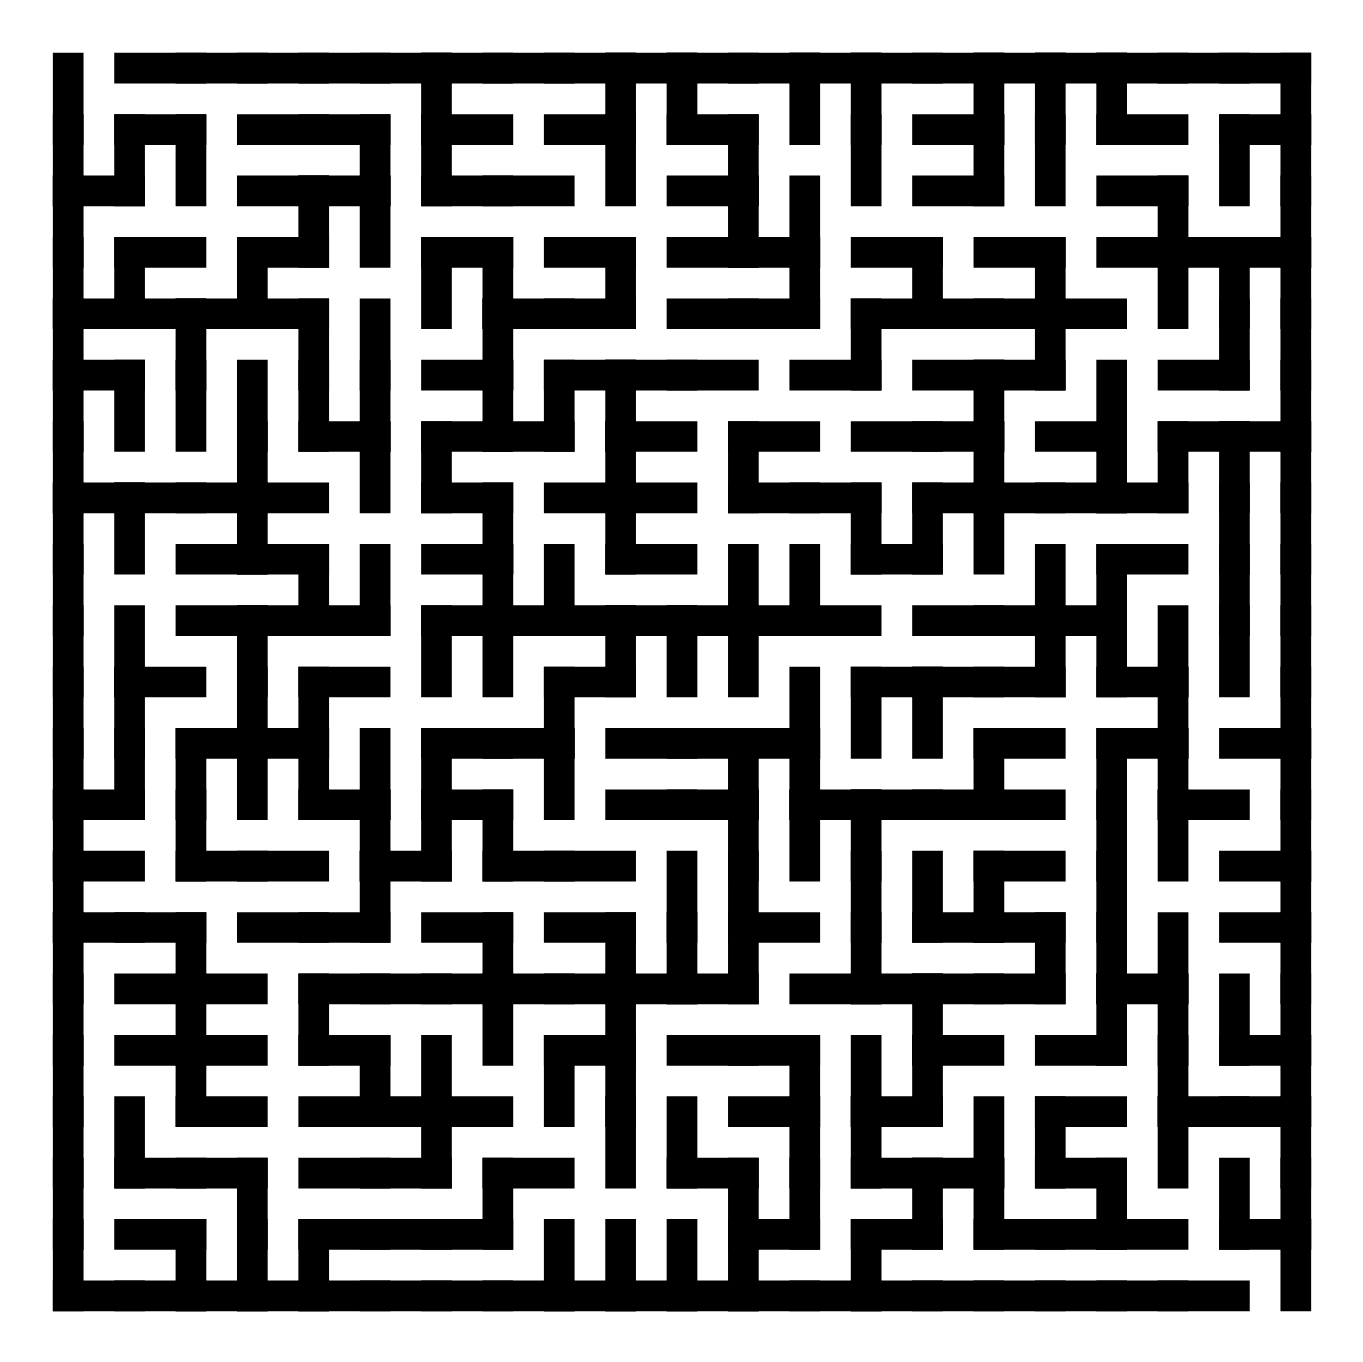 Kruskal's maze